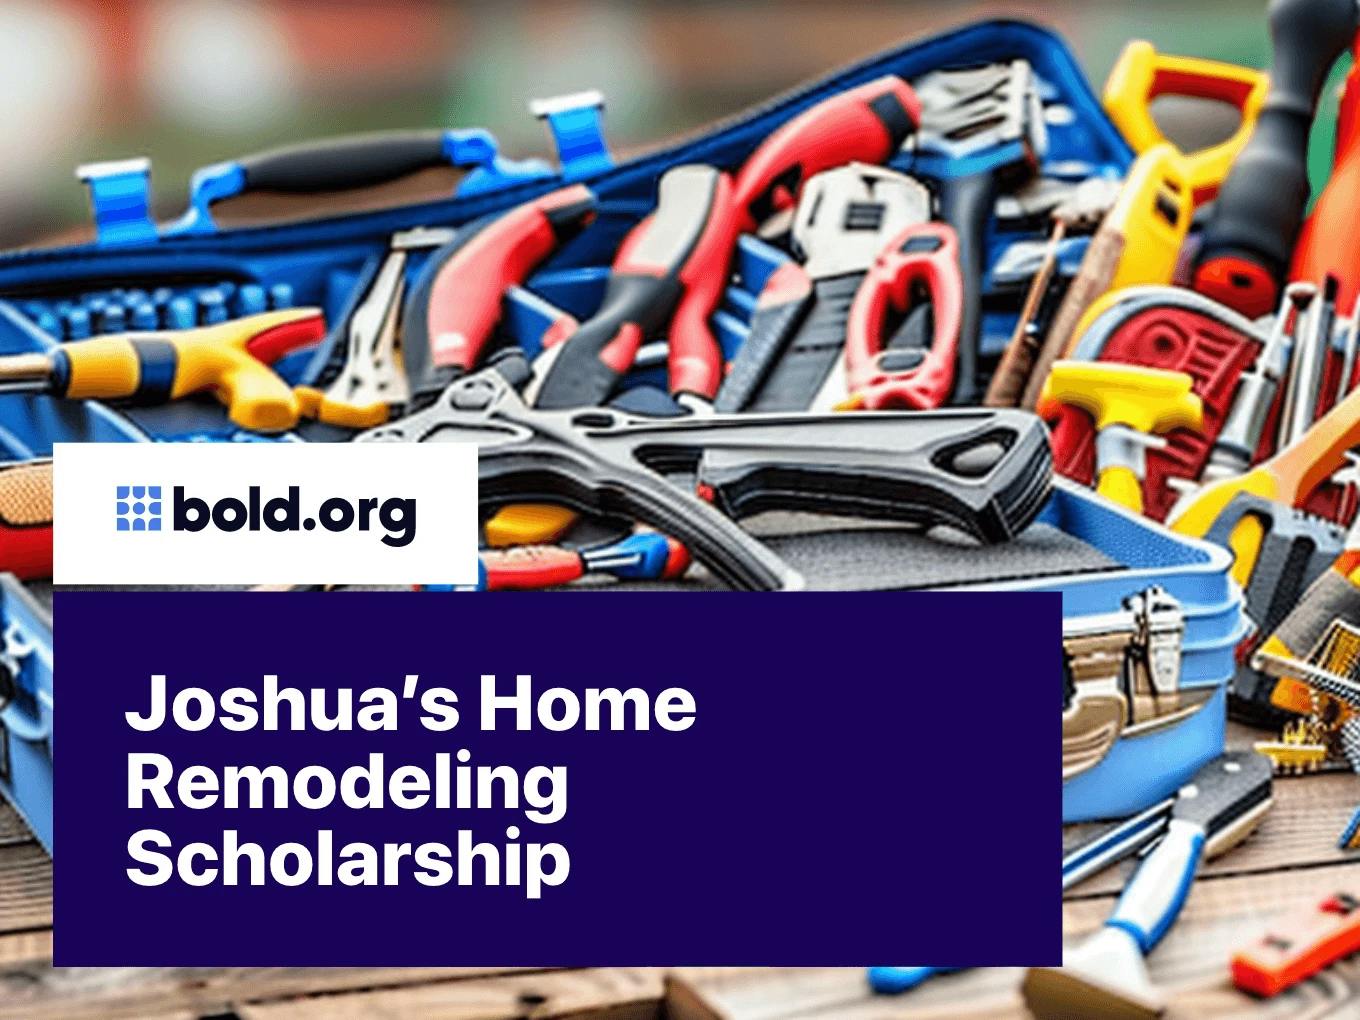 Joshua’s Home Remodeling Scholarship